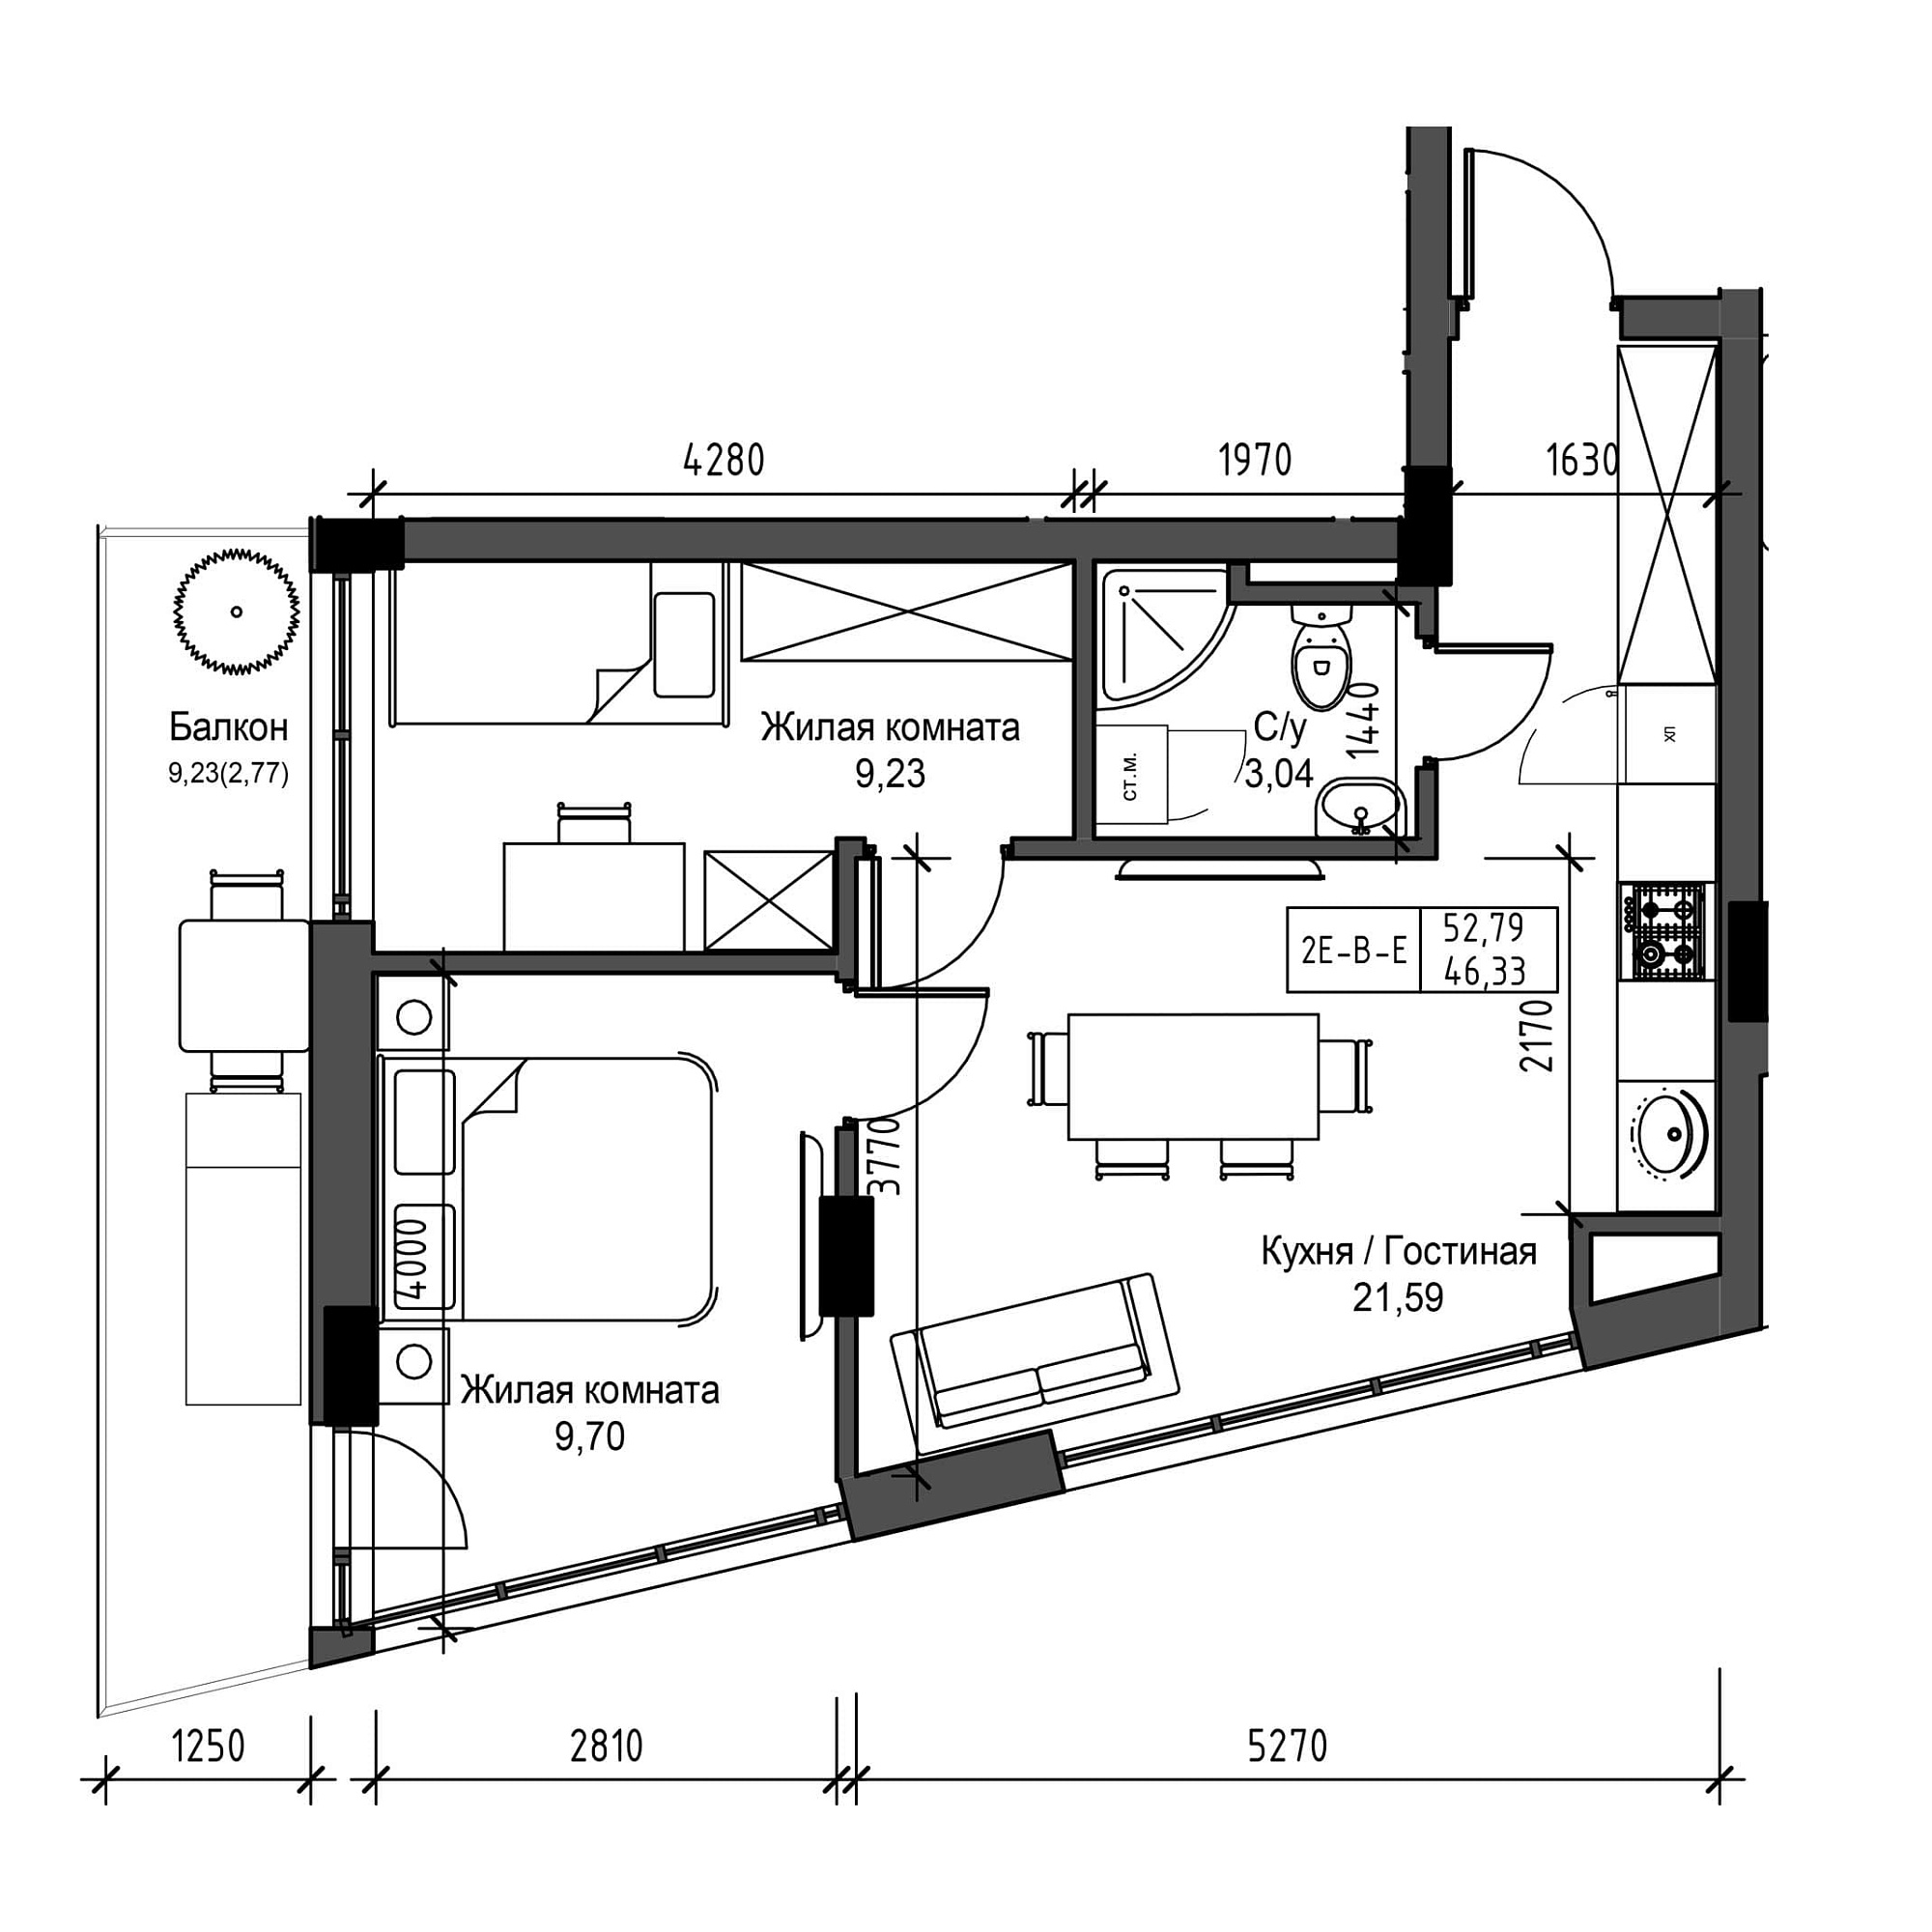 Планування 2-к квартира площею 46.33м2, UM-001-05/0009.